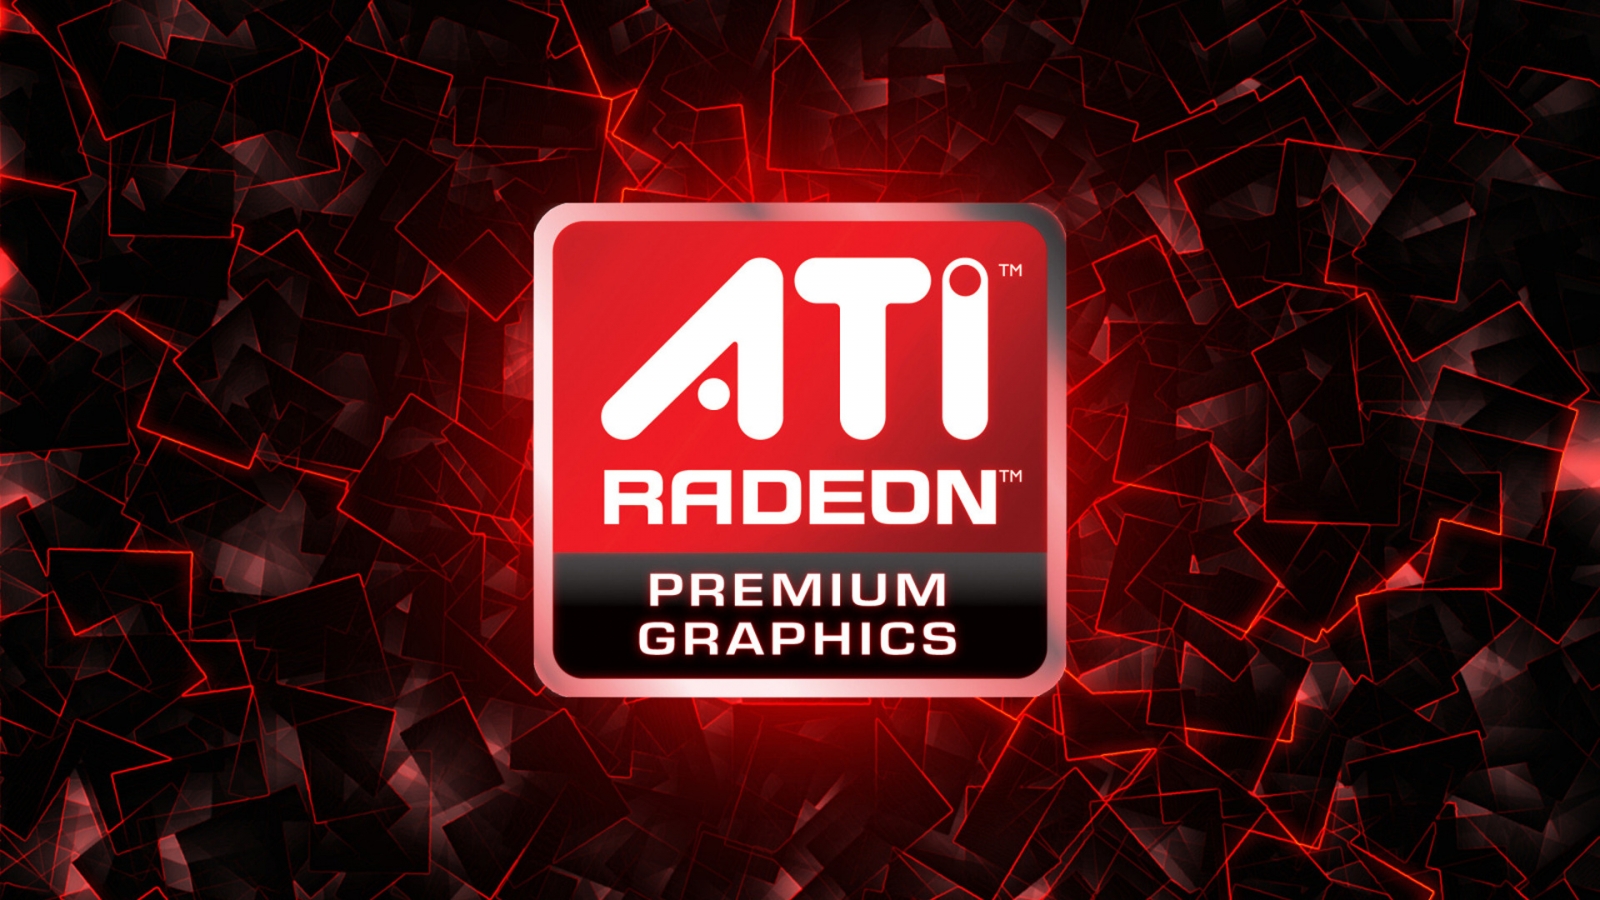 ATI Radeon Premium Graphics for 1600 x 900 HDTV resolution